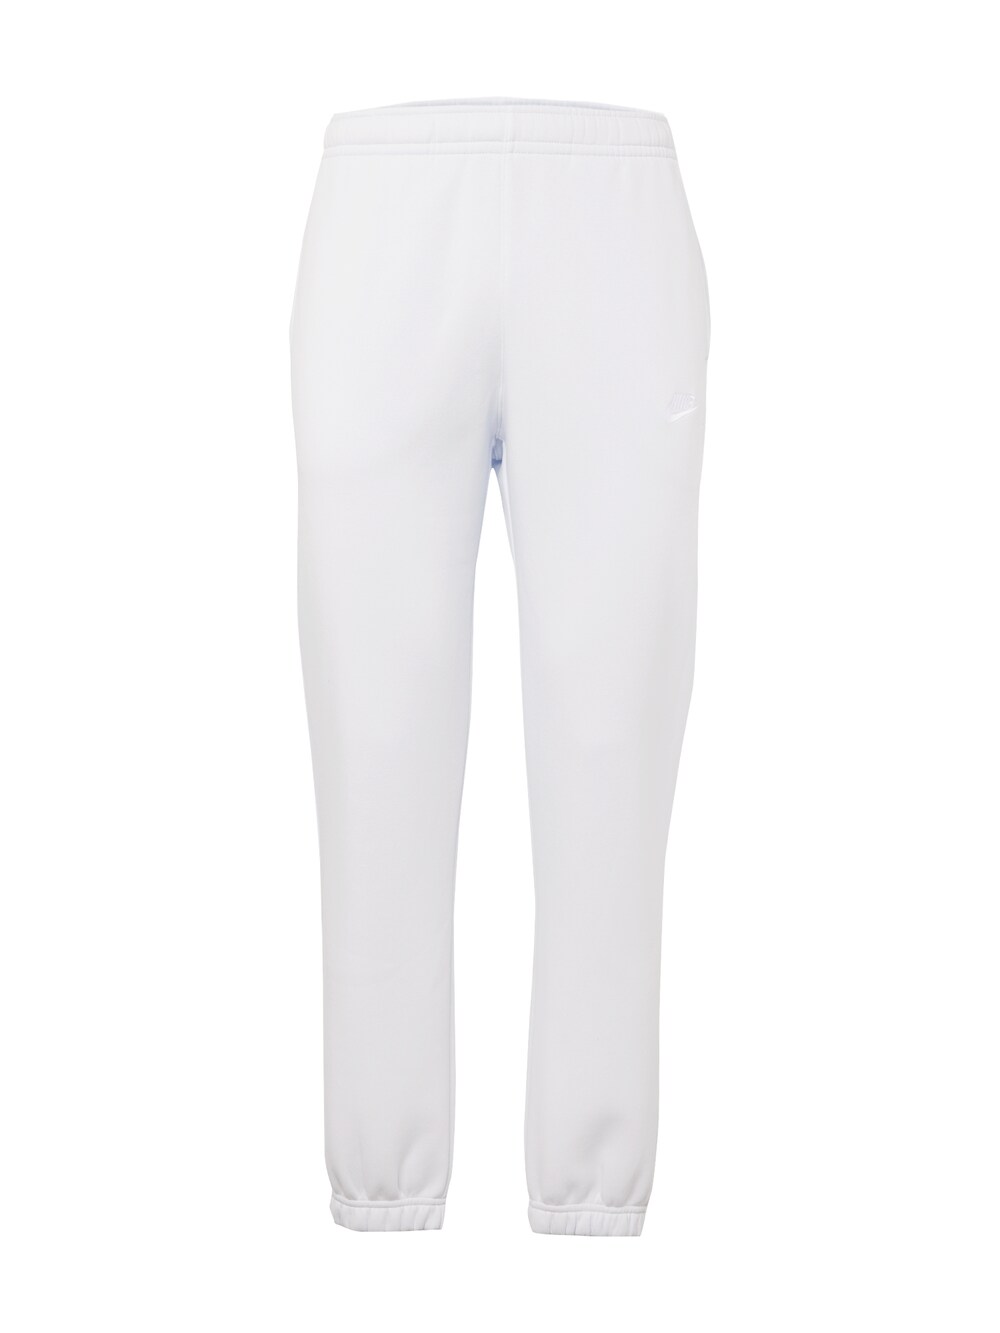 Зауженные брюки Nike Sportswear Club Fleece, светло-серый